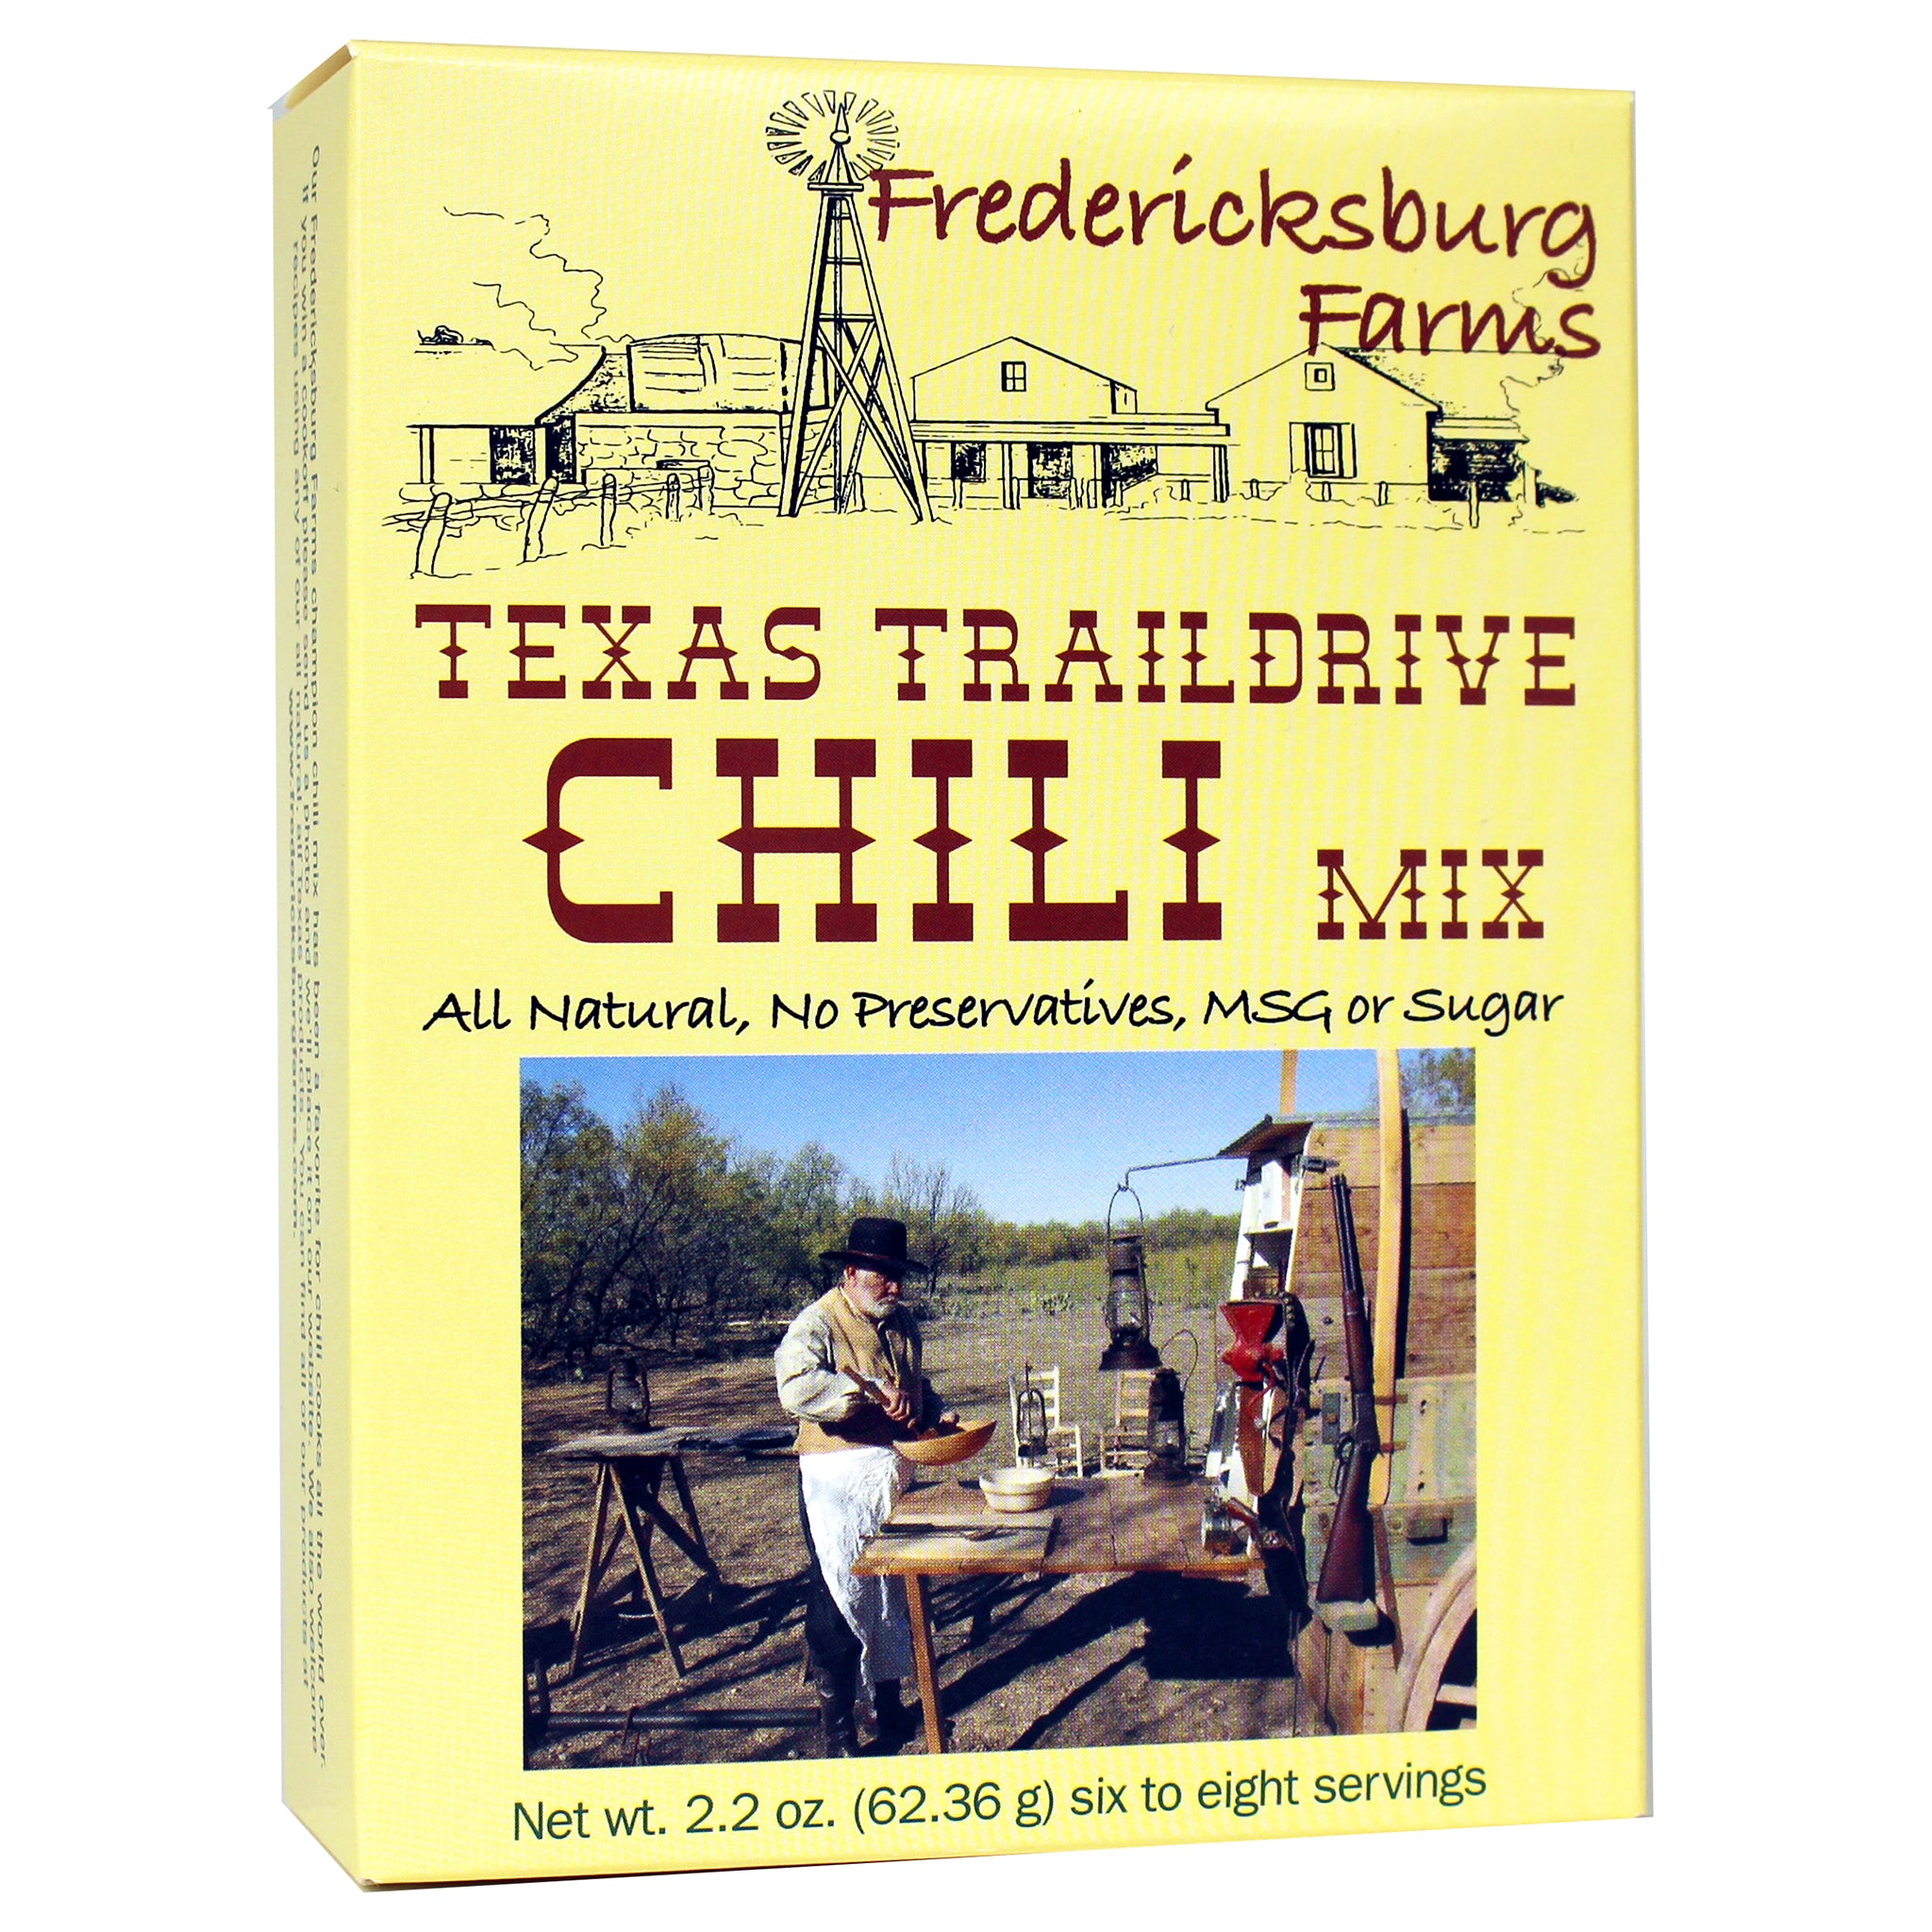 Texas Trail Drive Chili Mix - Fredericksburg Farms